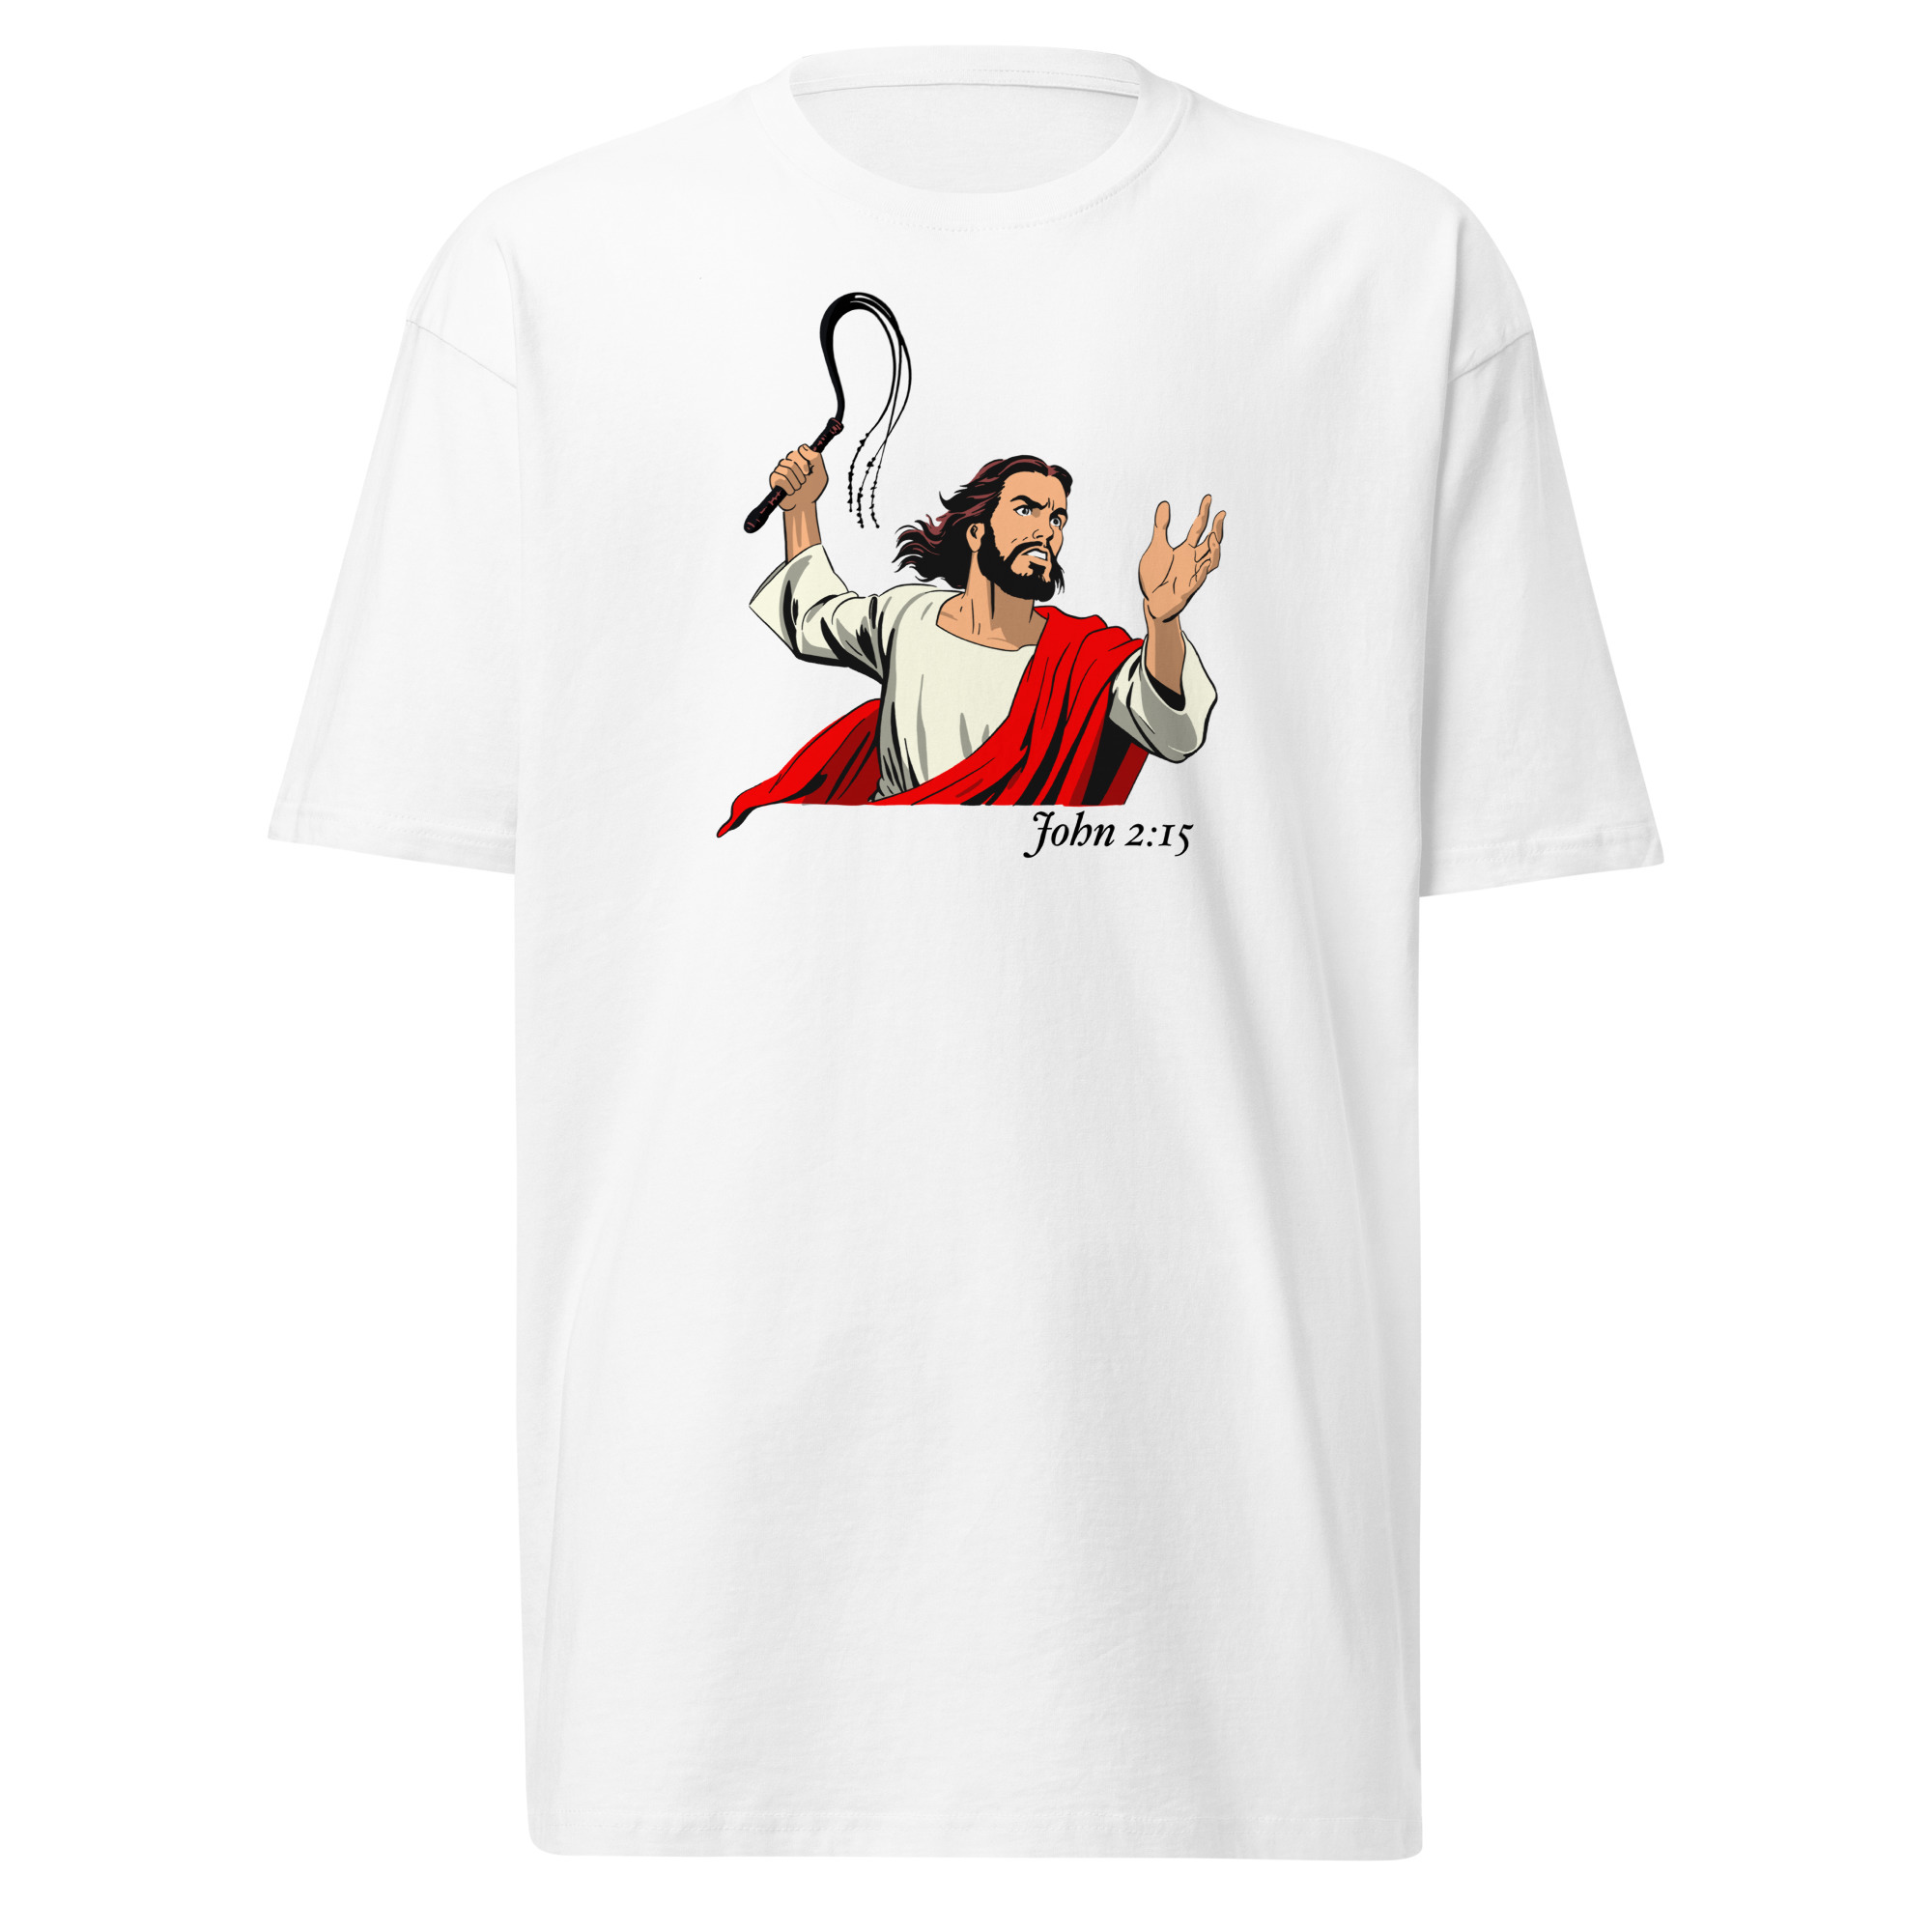 John 2:15 T-Shirt - White / M